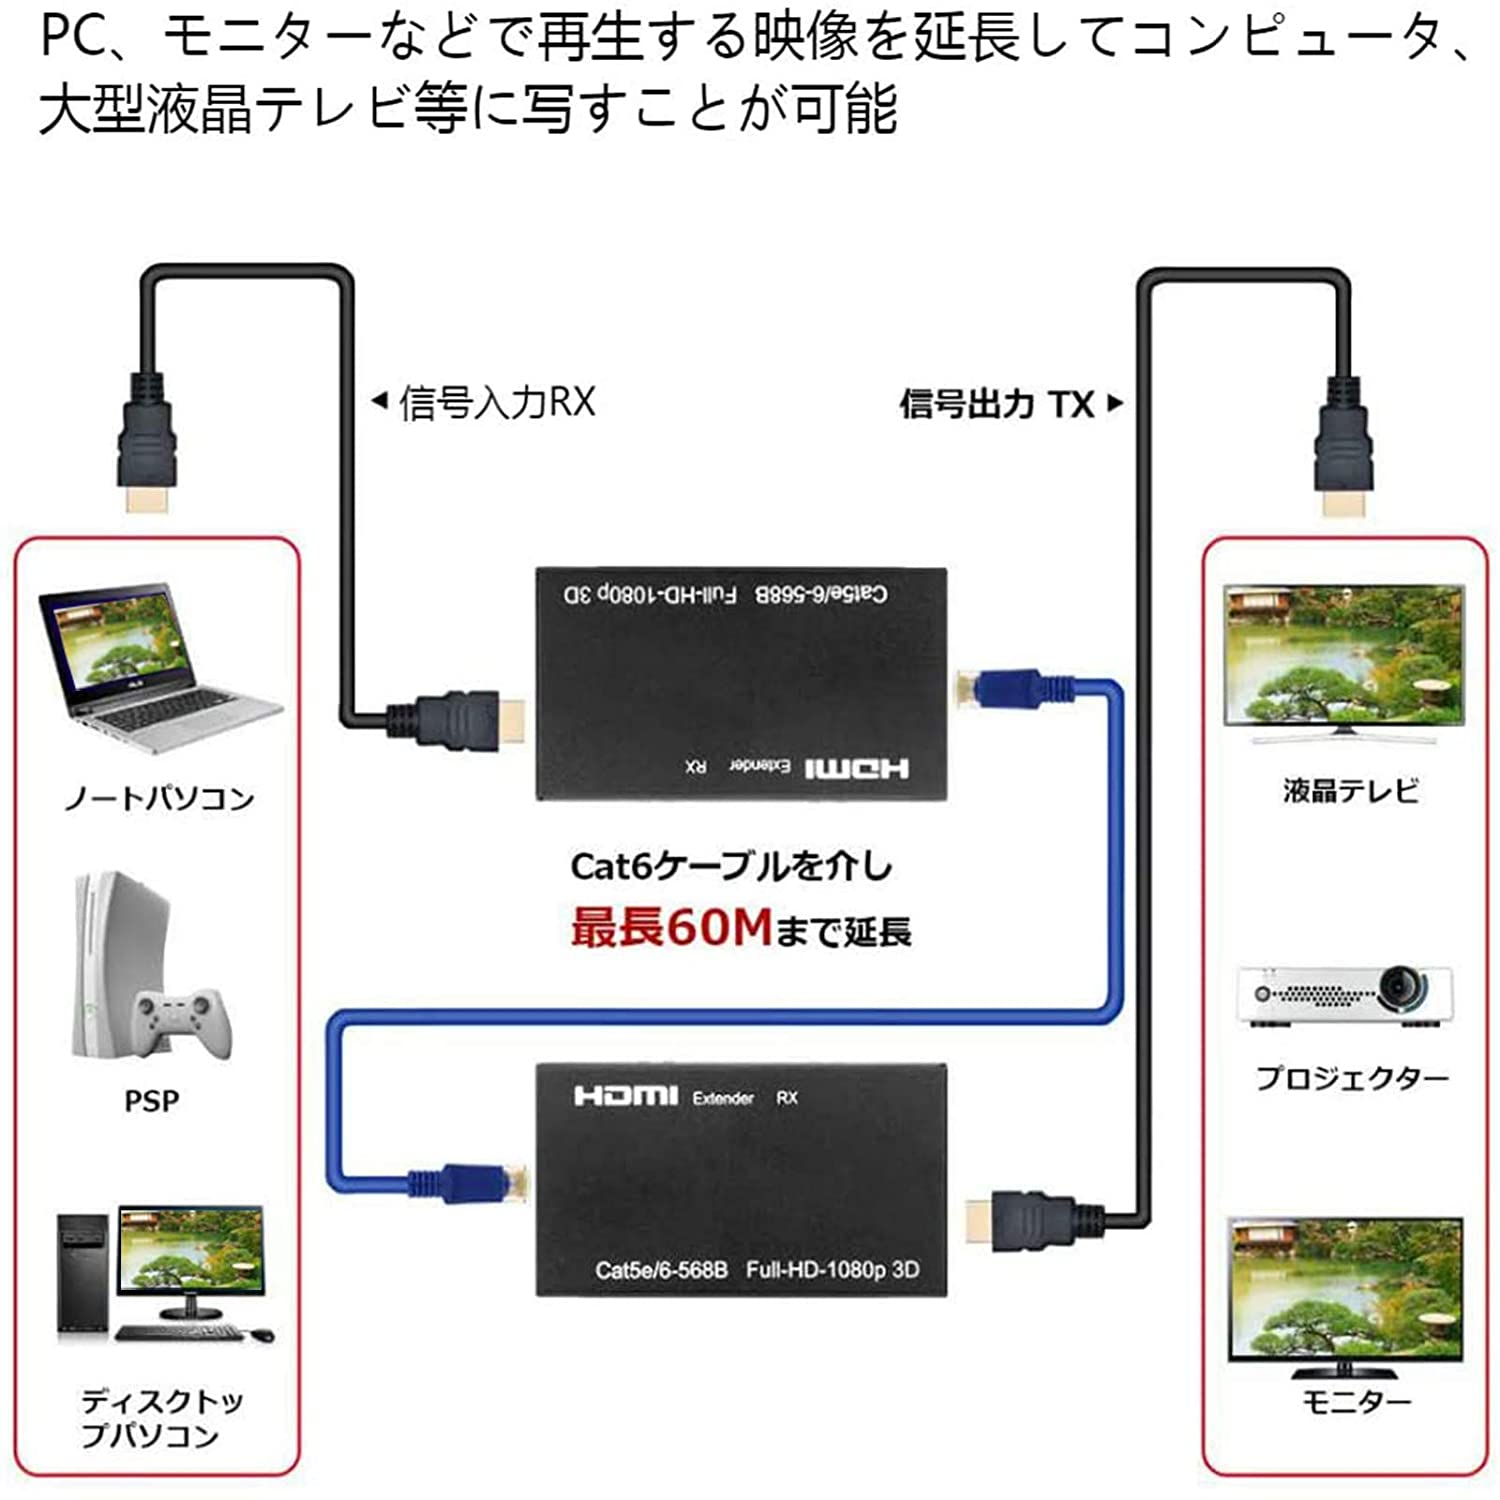 HDMI エクステンダー 延長機器 HDMI to RJ45 LAN 変換アダプタ 